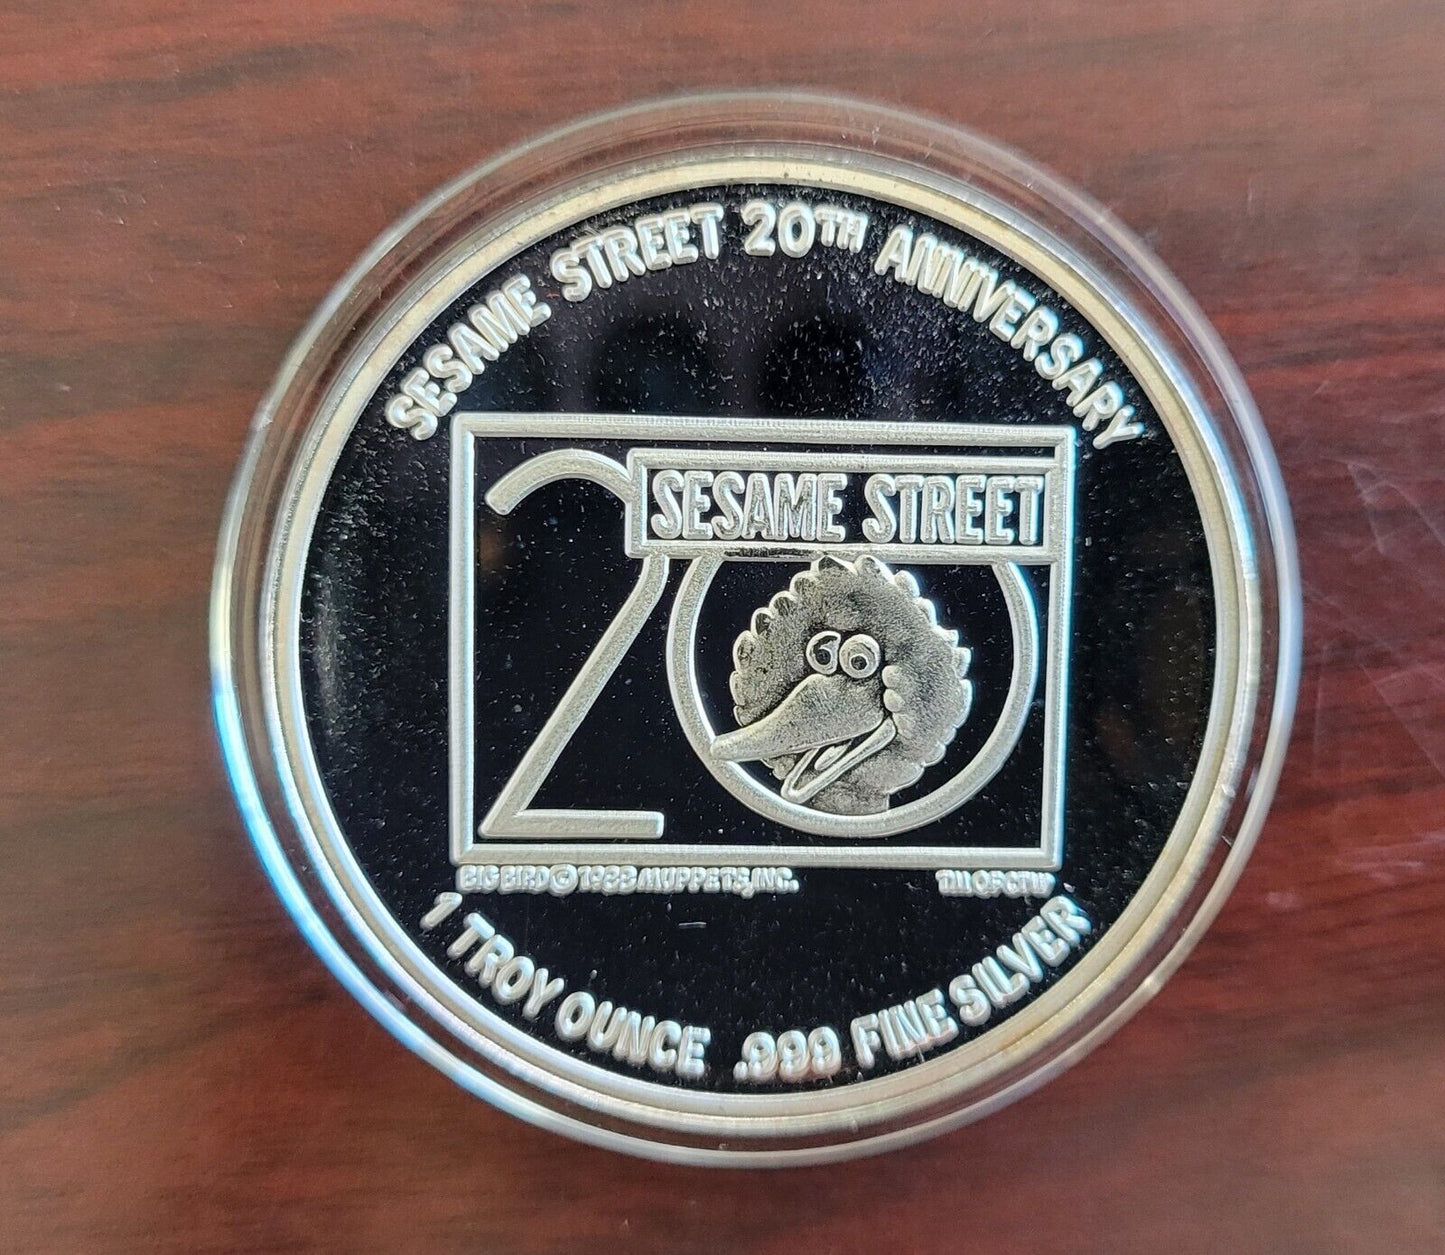 Ernie Sesame Street 20th Anniversary Enameled 1oz.Silver Round .999 Fine